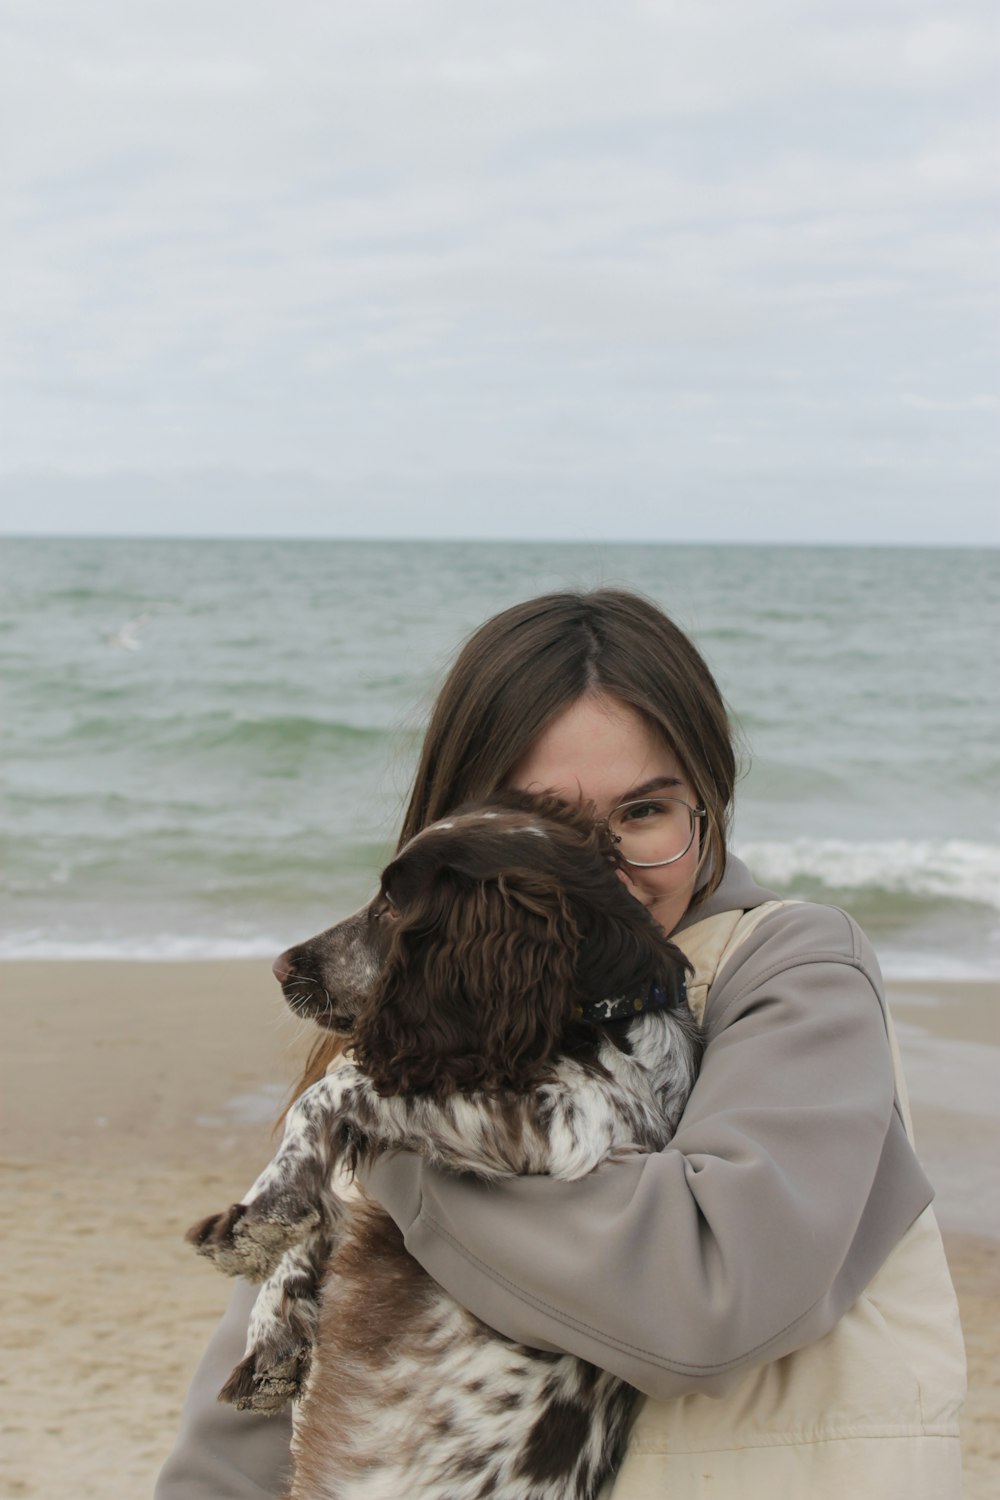 a woman holding a dog on the beach